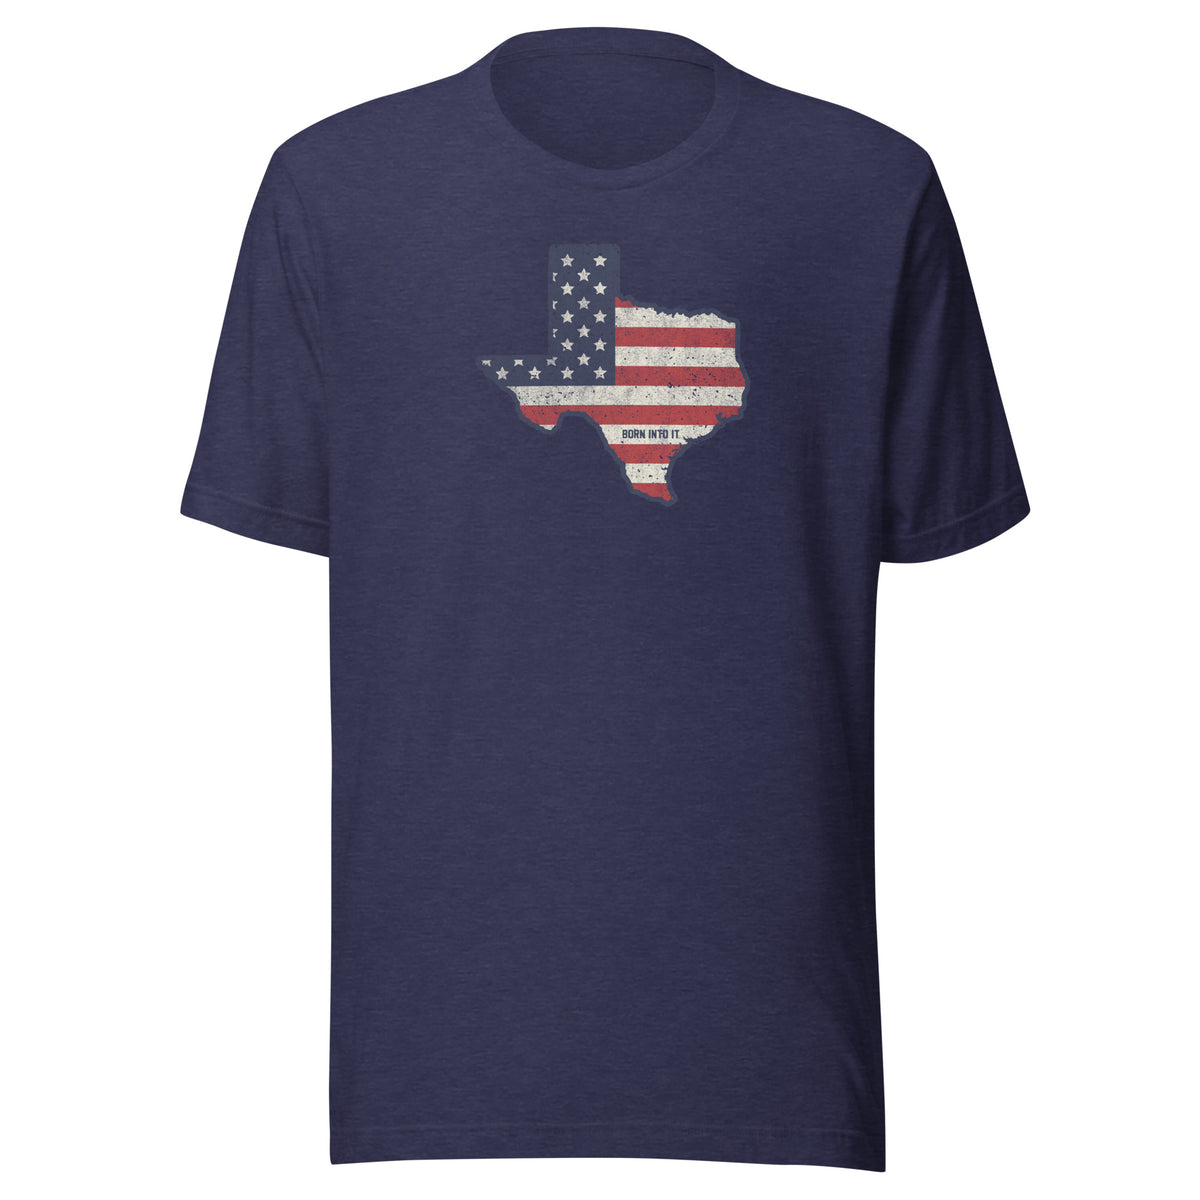 Texas Stars & Stripes Unisex t-shirt